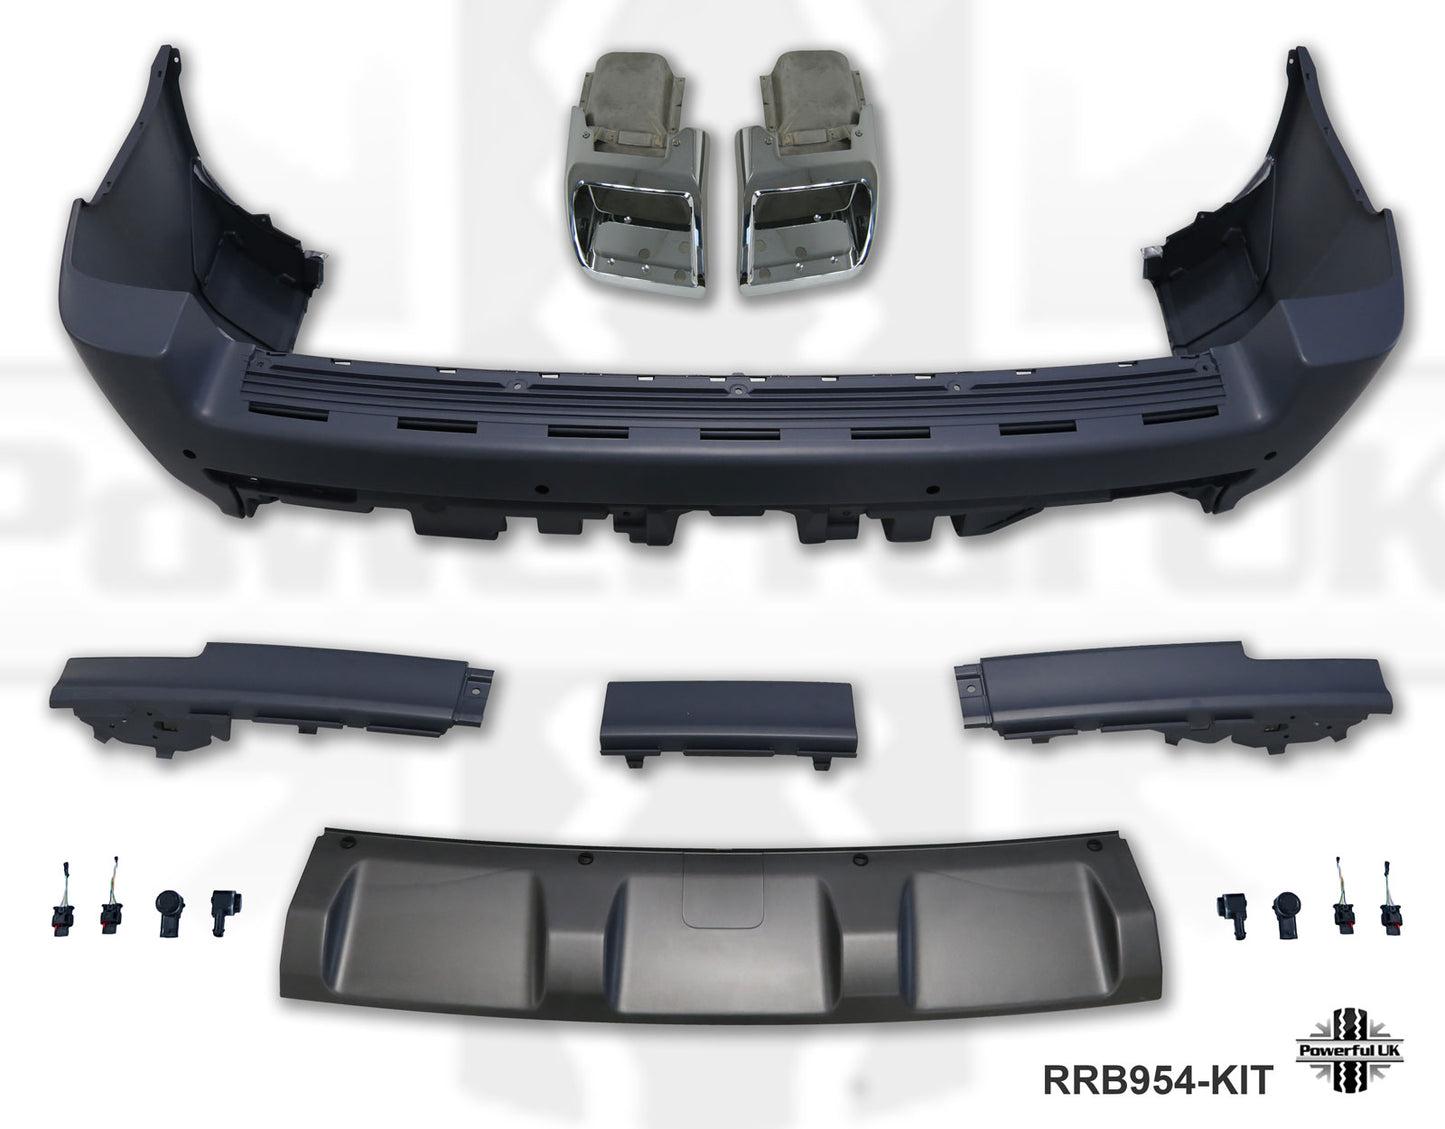 Rear Bumper kit for Range Rover L322 "Exterior Design Pack"  for 2006-09